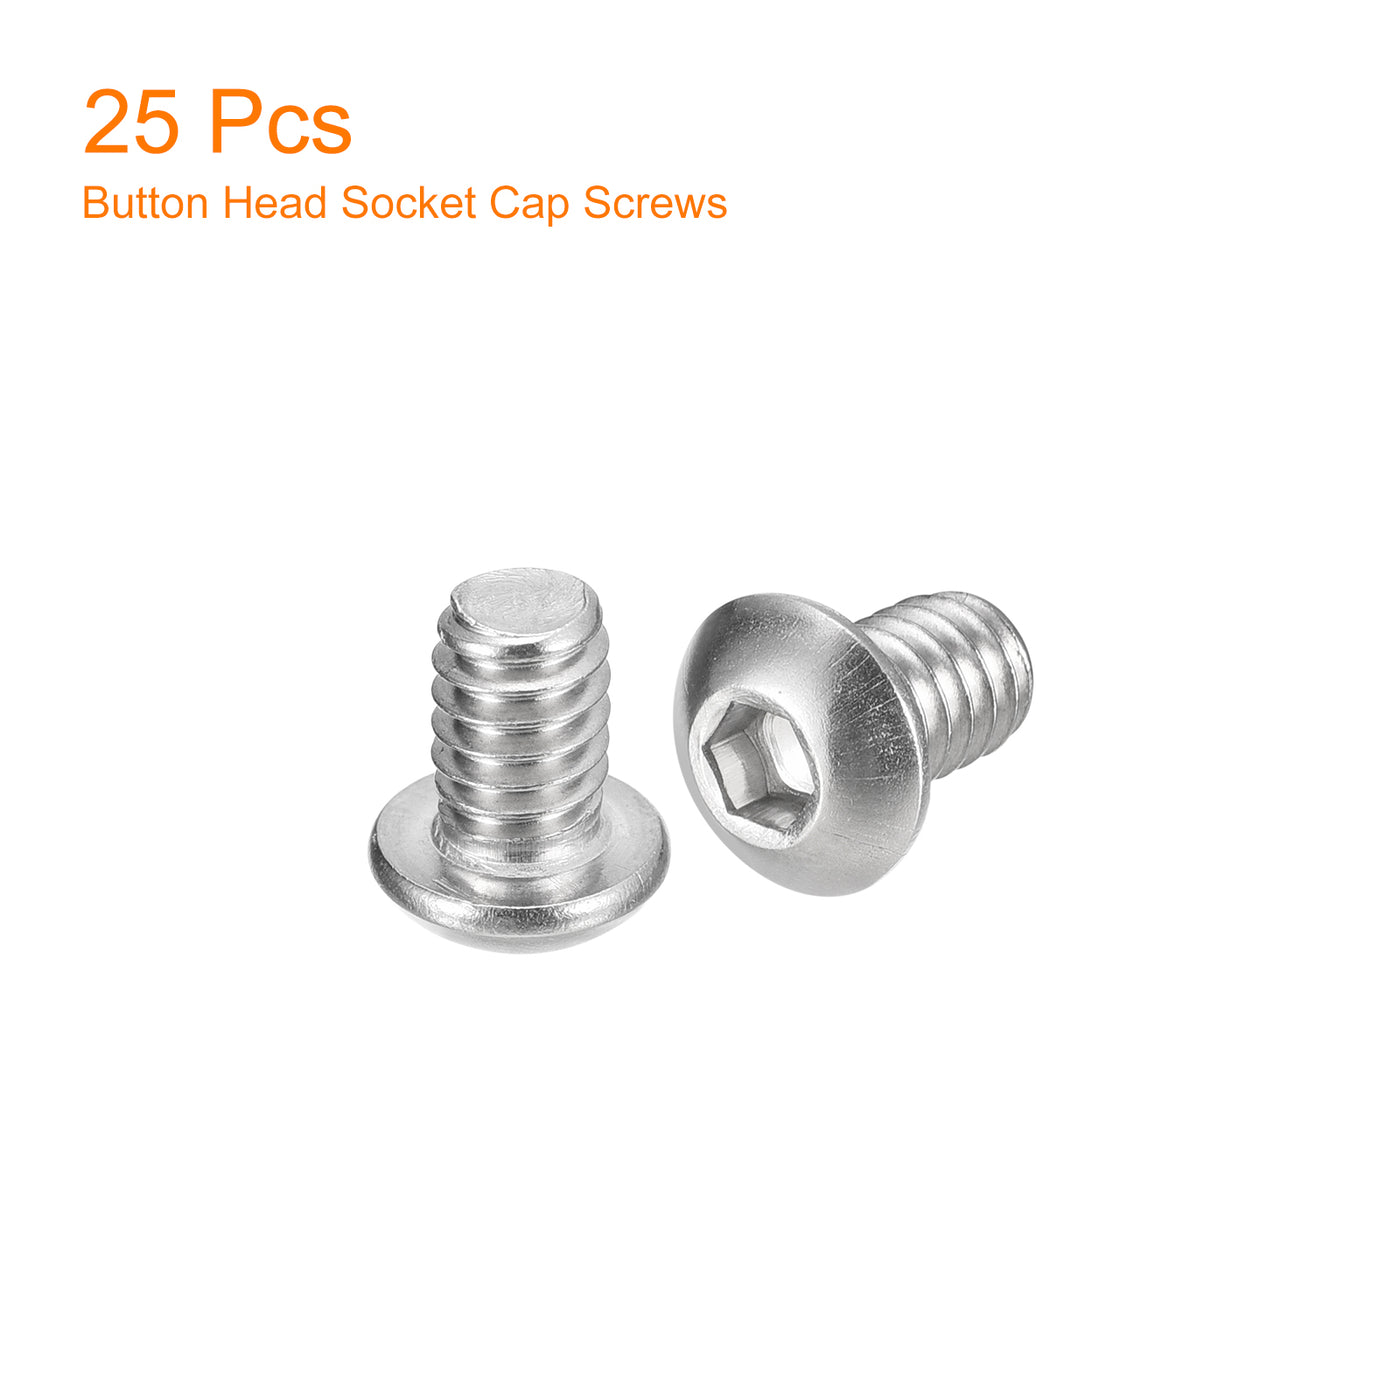 uxcell Uxcell 1/4-20x3/8" Button Head Socket Cap Screws, 25pcs 304 Stainless Steel Screws